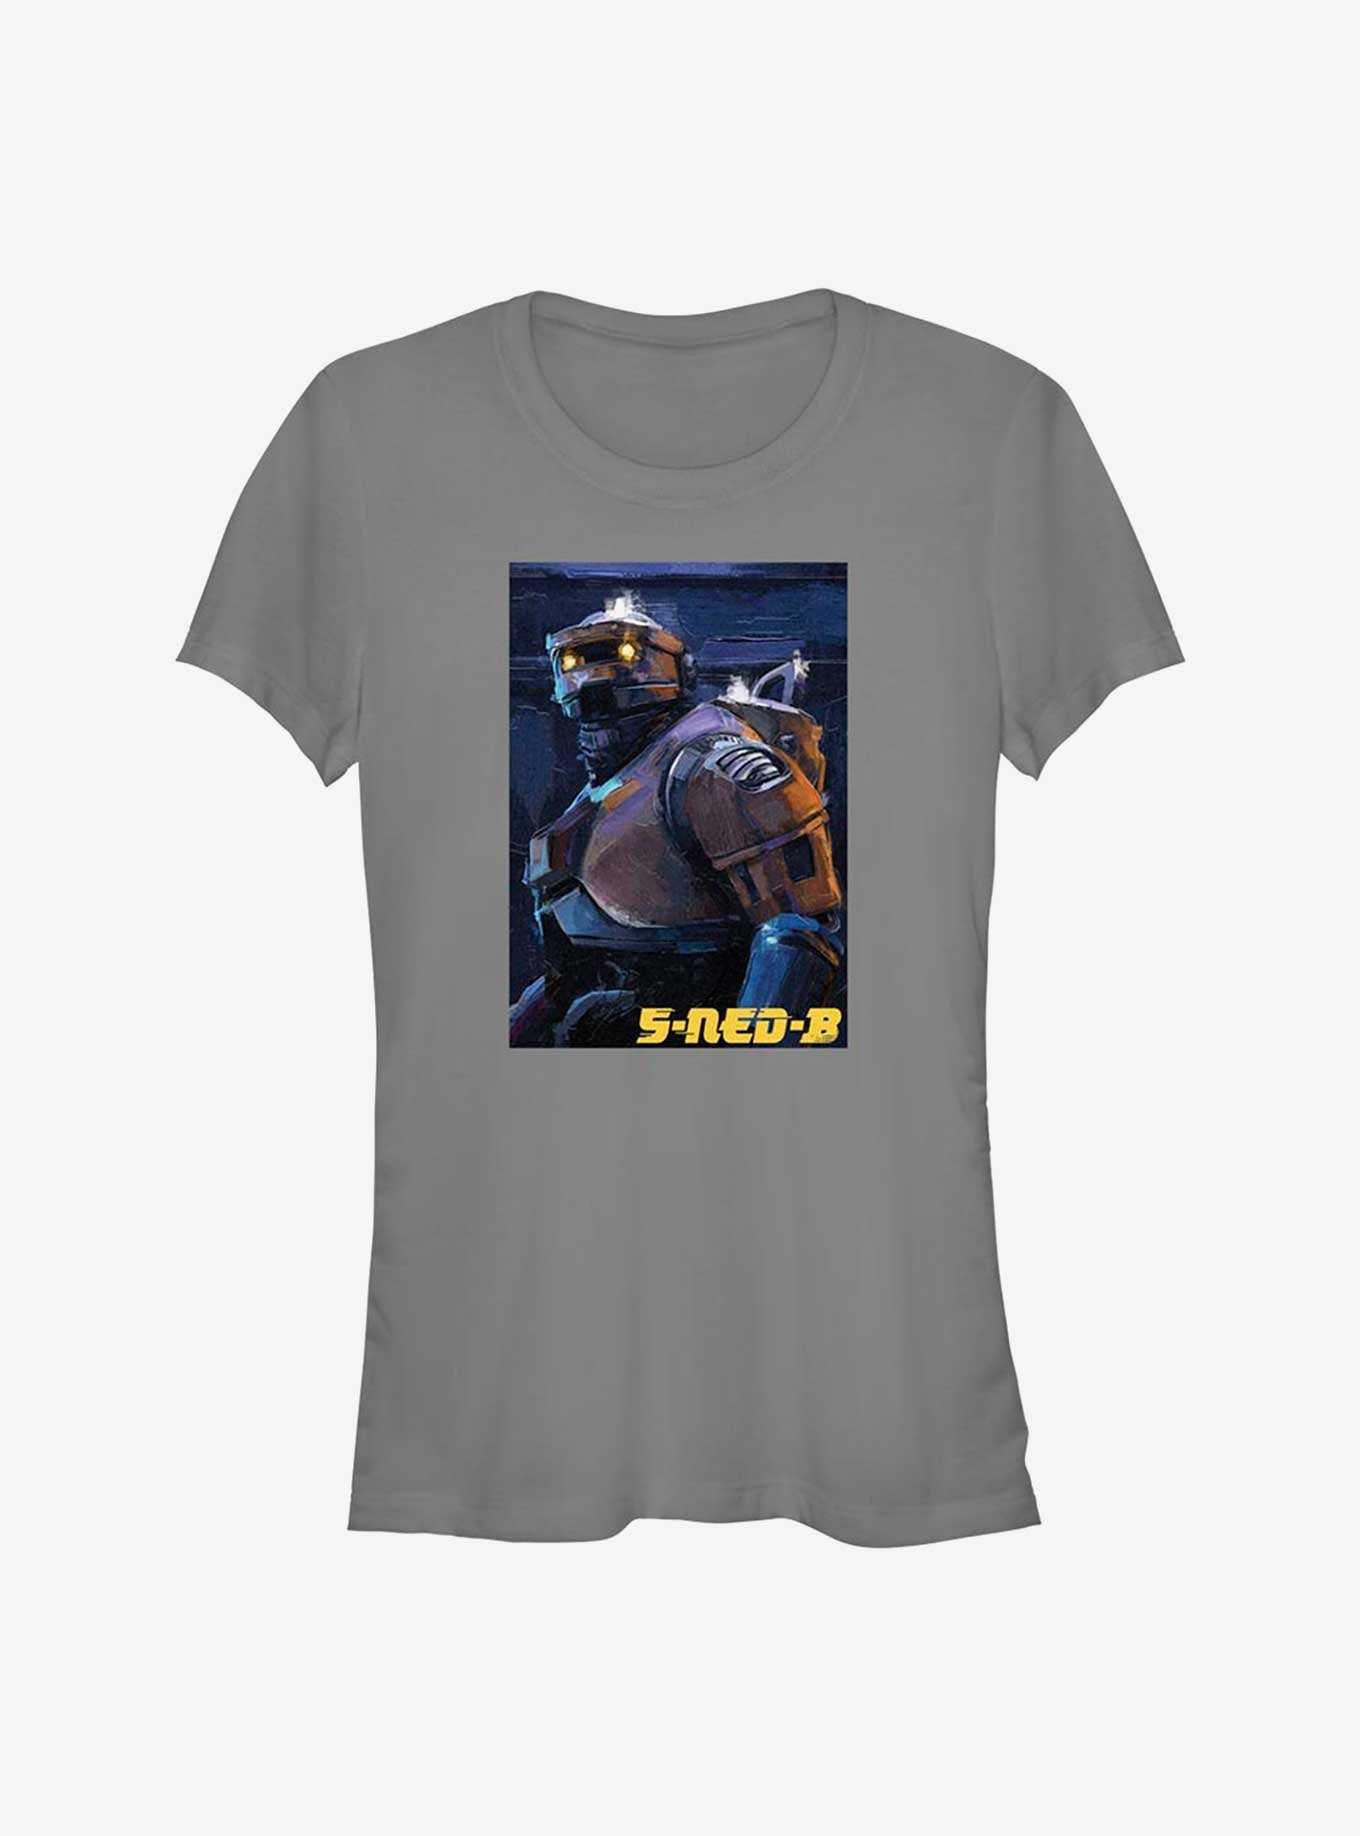 Star Wars Obi-Wan Kenobi 5-Ned-B Painting Girls T-Shirt, , hi-res